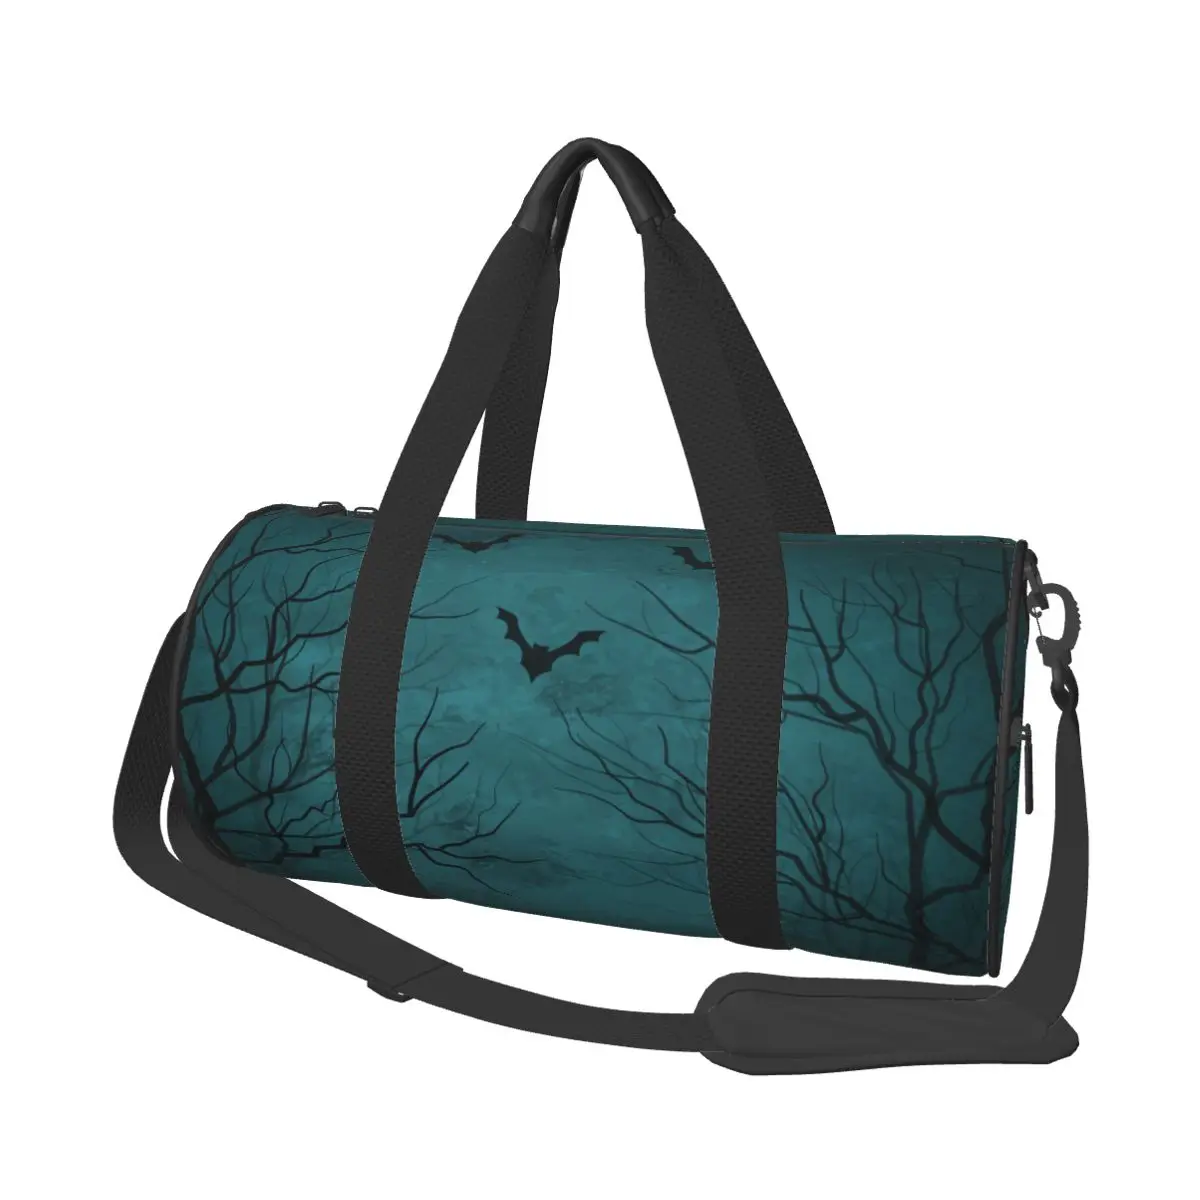 

Travel Bag Duffle Scary Trees With Flying Bats Fitness Bag Handbag Bag Luggage Shoulder Bag Zipper Weekend Sport Gym Bag